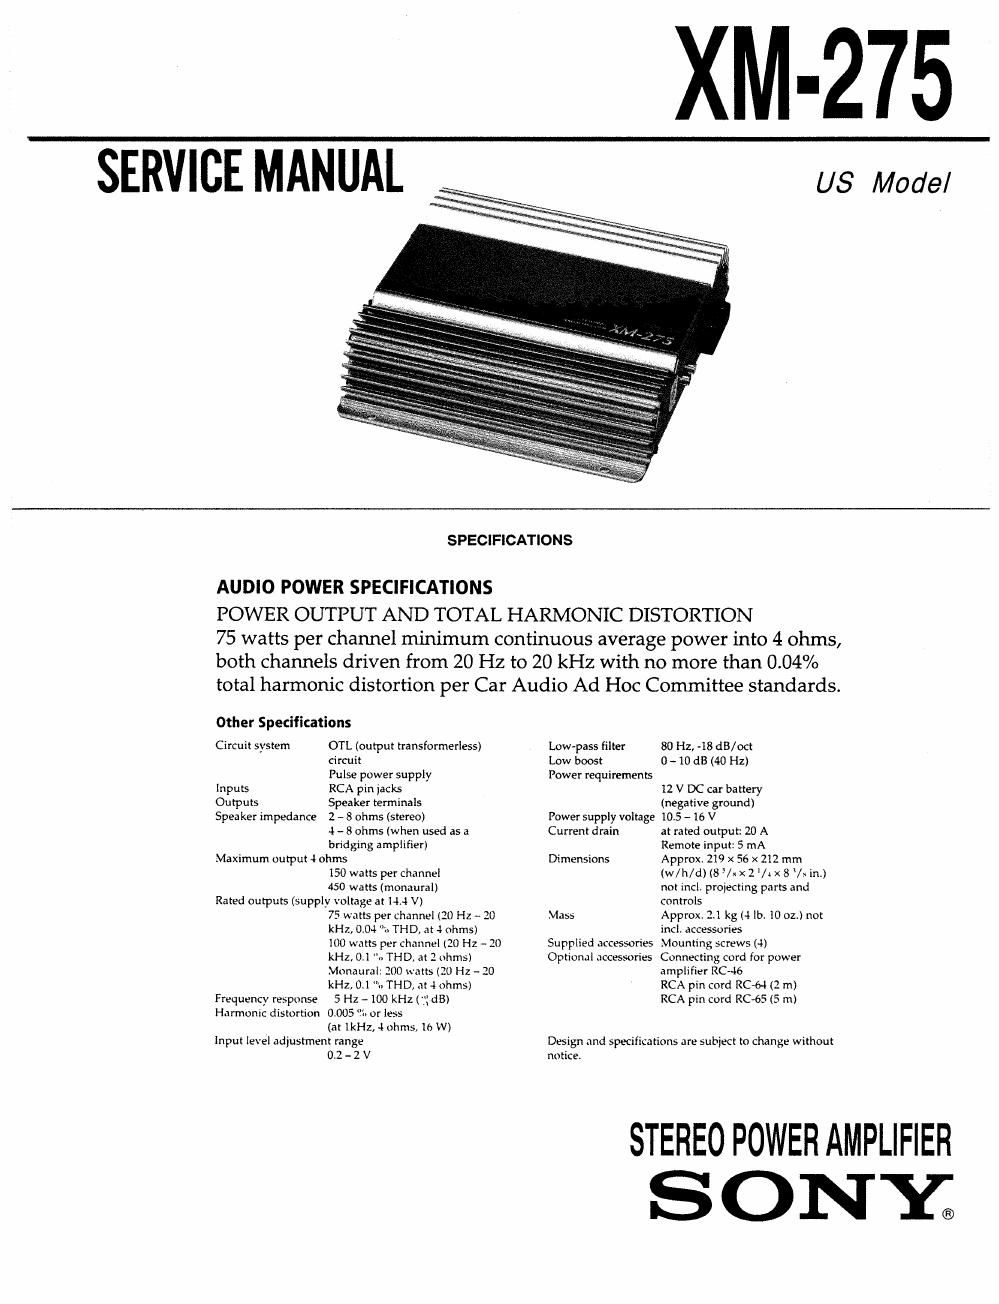 sony xm 275 service manual